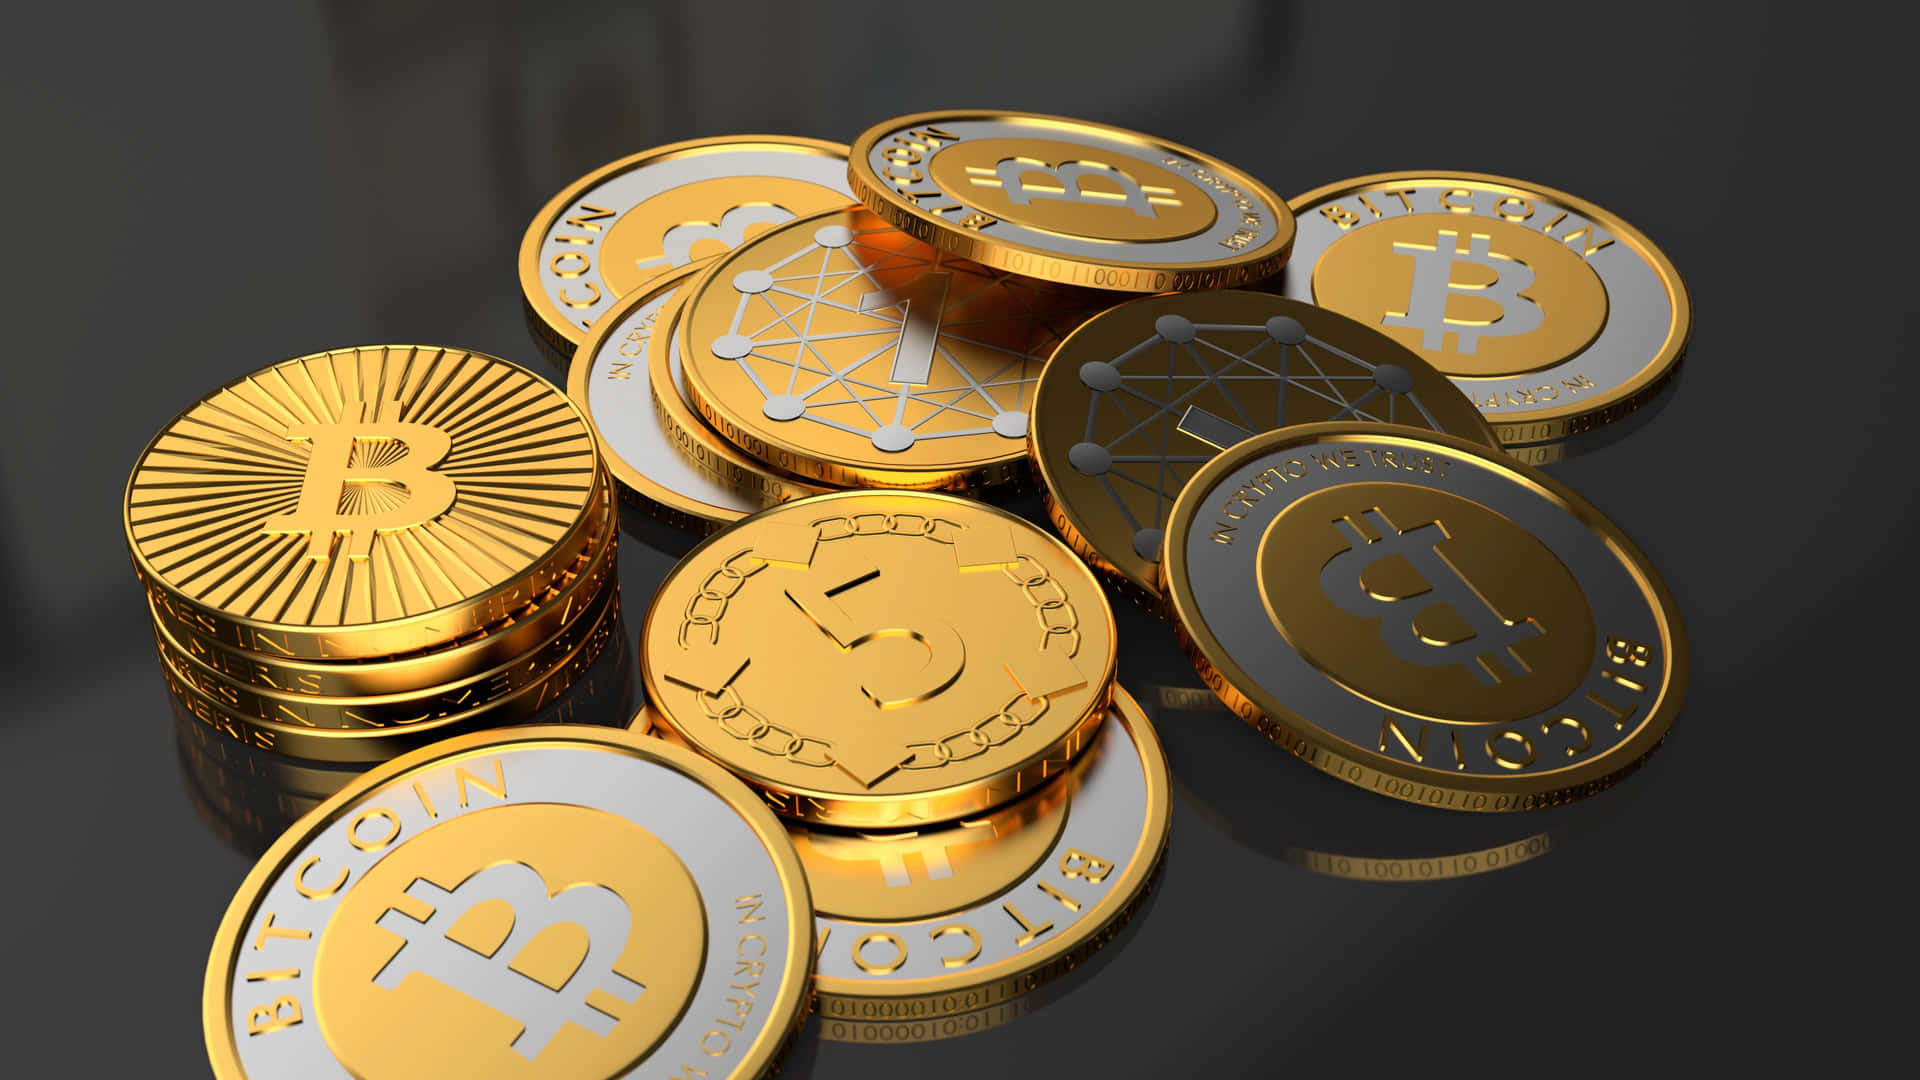 Bitcoin Coins On Black 4k Wallpaper